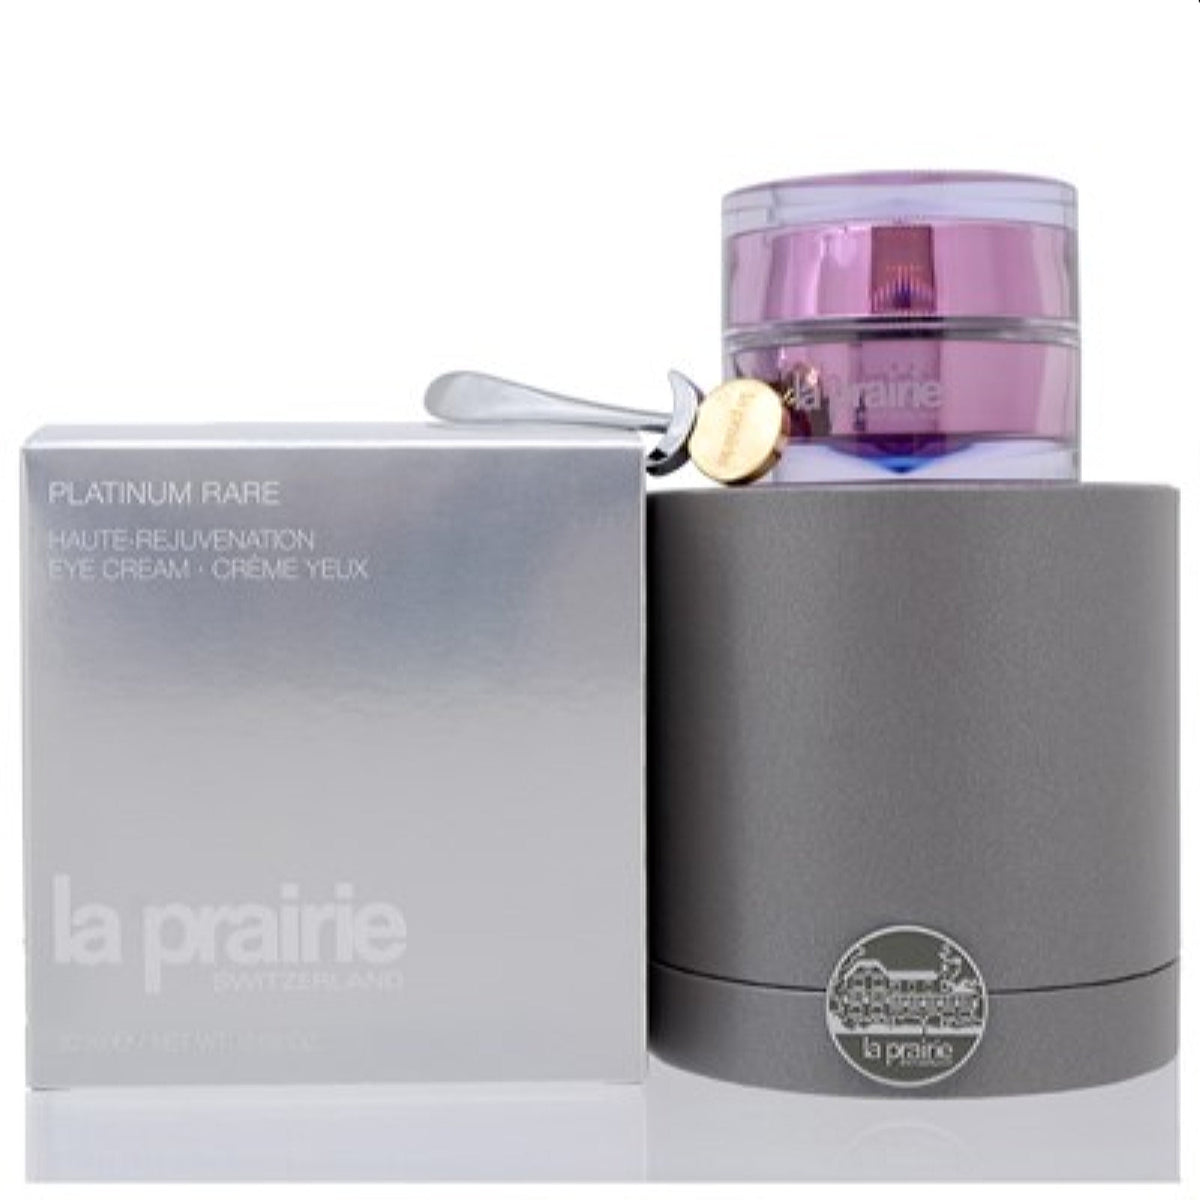 La Prairie Platinum Rare Haute-Rejuvenation Eye Cream 0.67 Oz (20 Ml)  